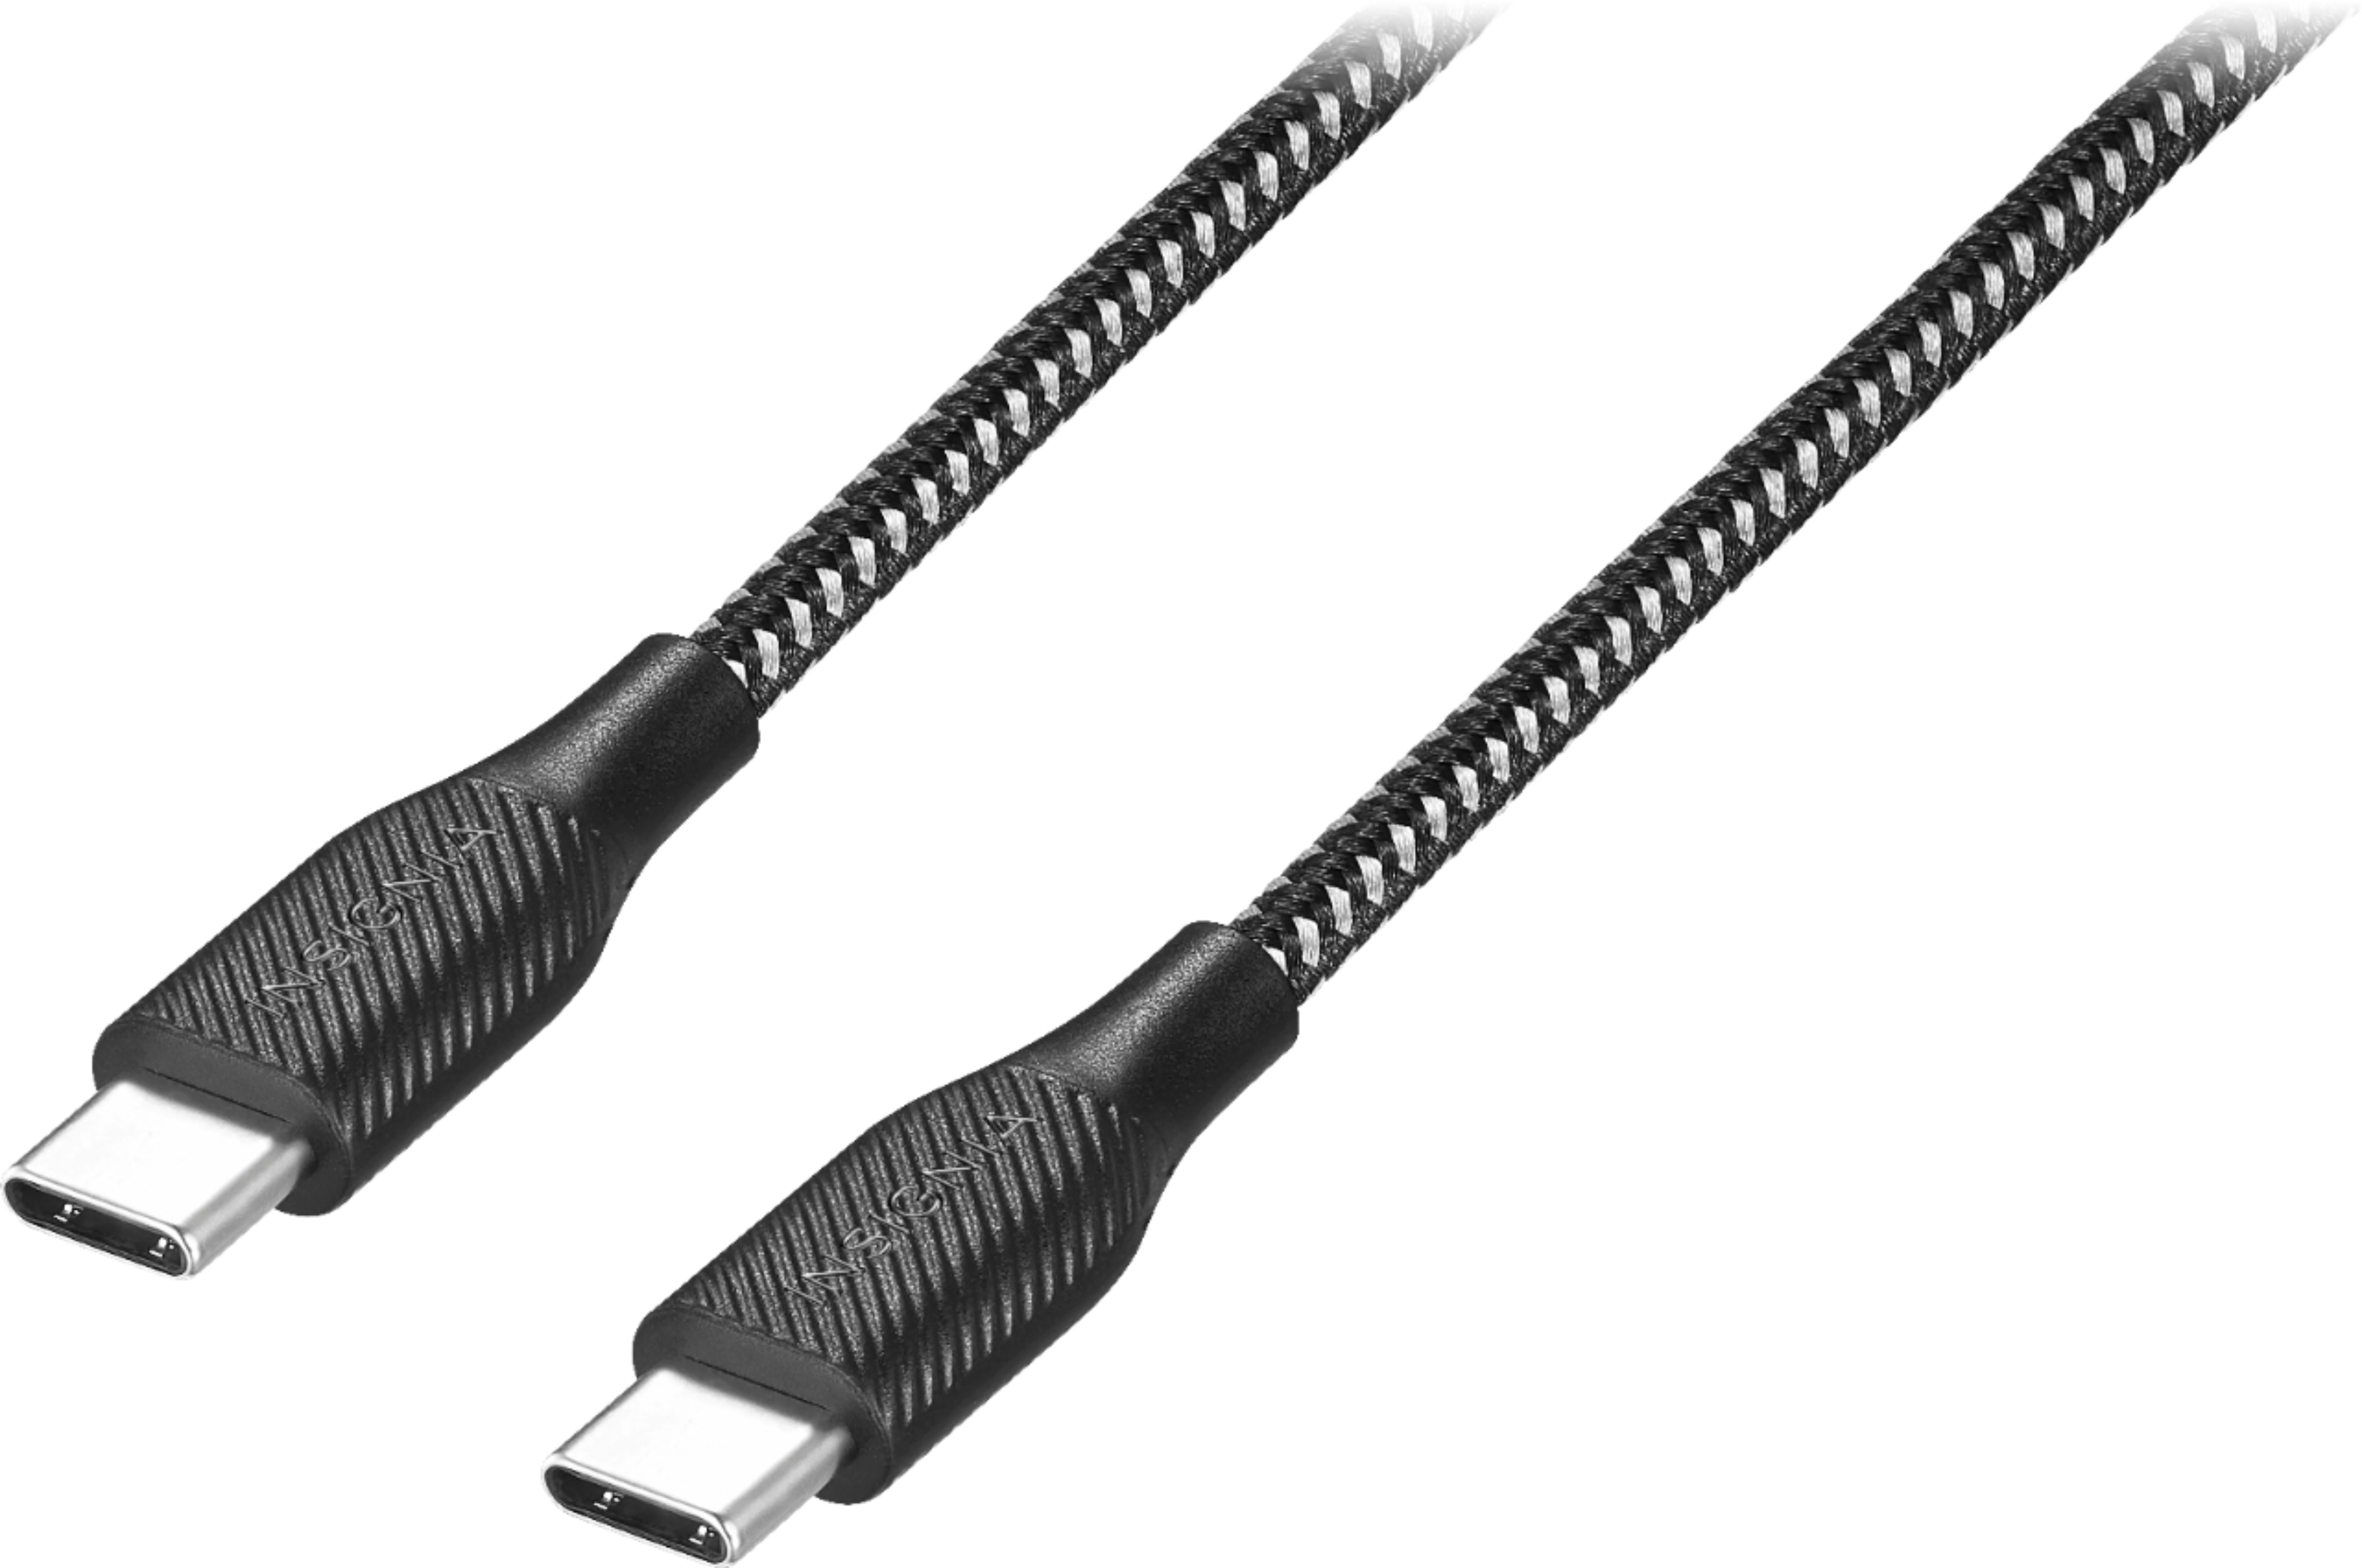 inCharge 6 Cable de carga corto USB-C - Gris oscuro